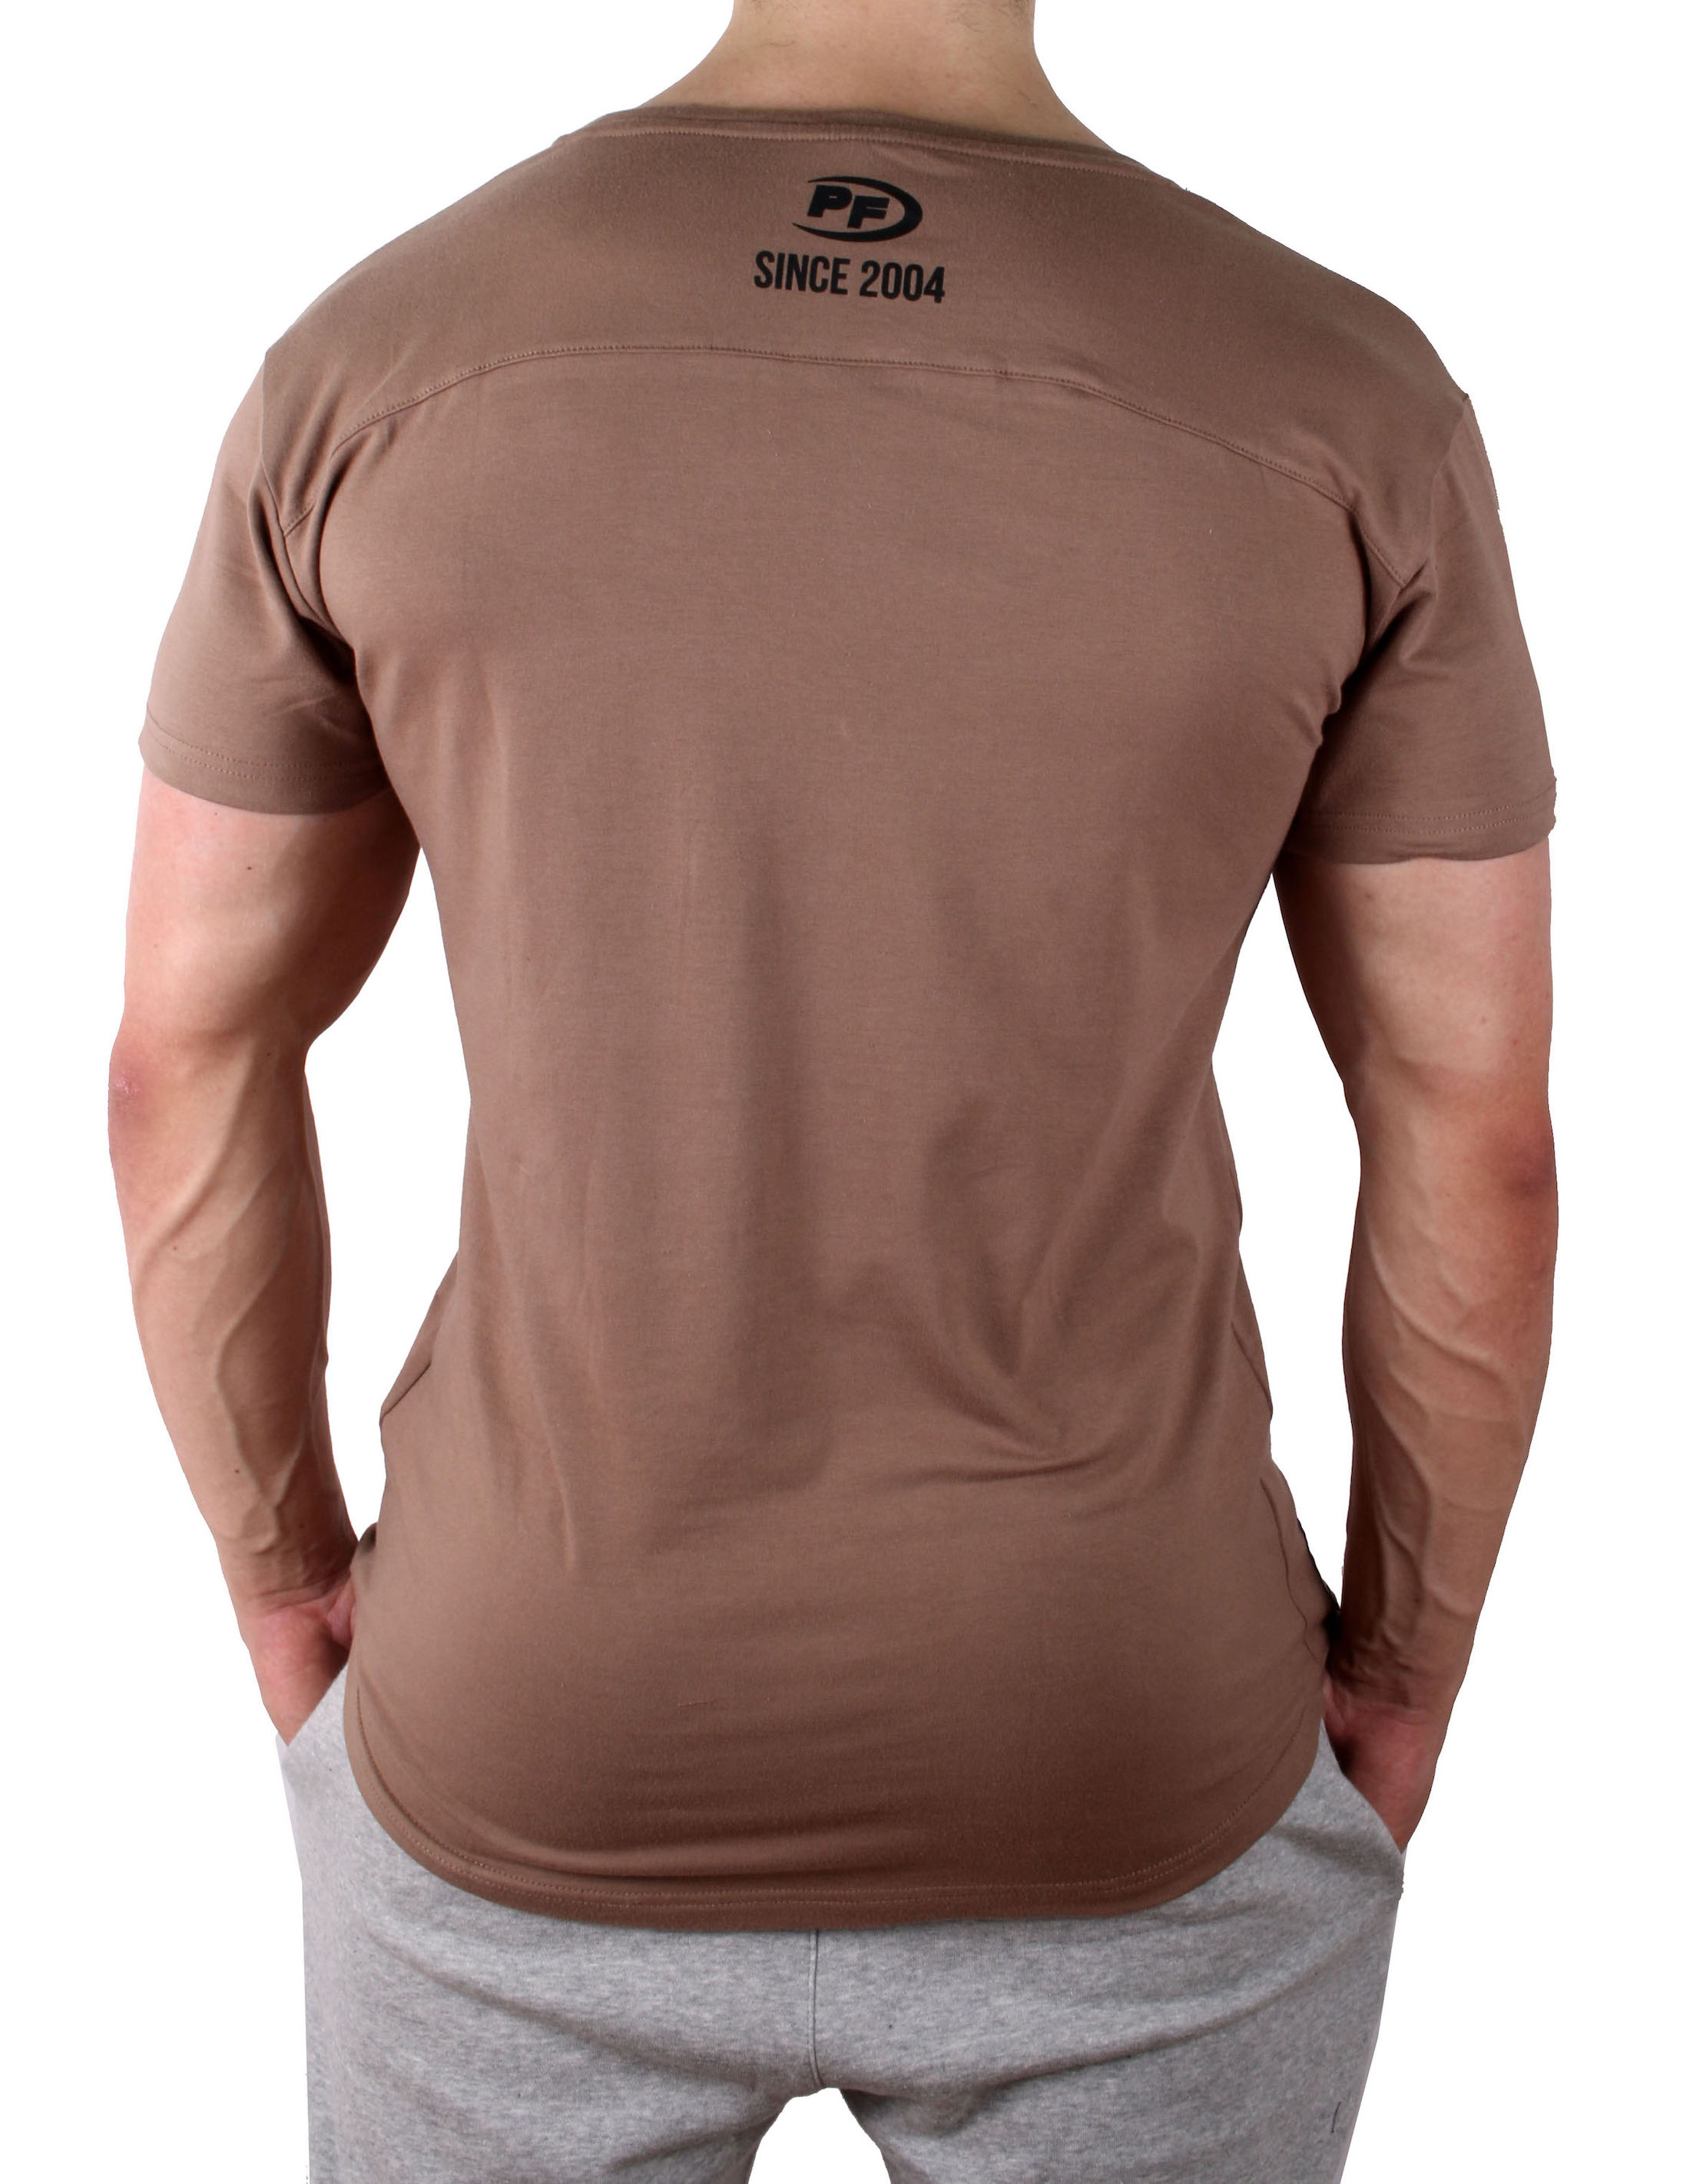 PowerFood X Gym Generation Collab Shirt - Khaki